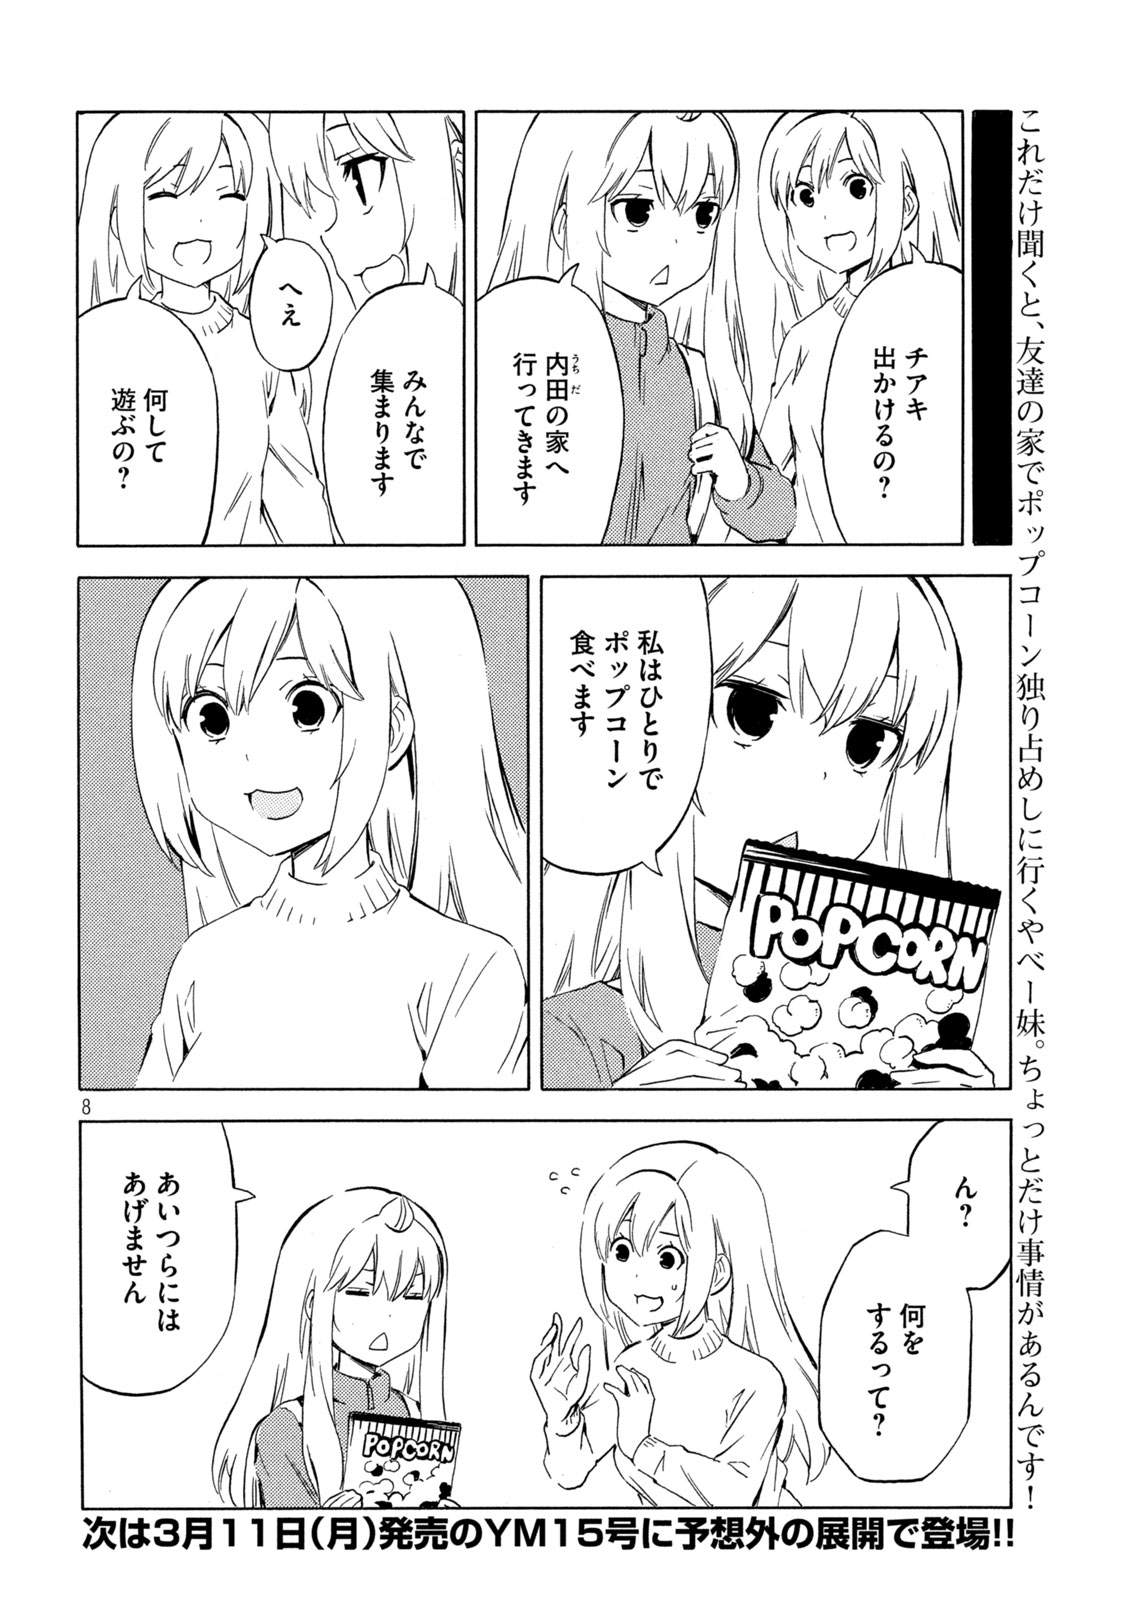 Minami-ke - Chapter 479 - Page 8